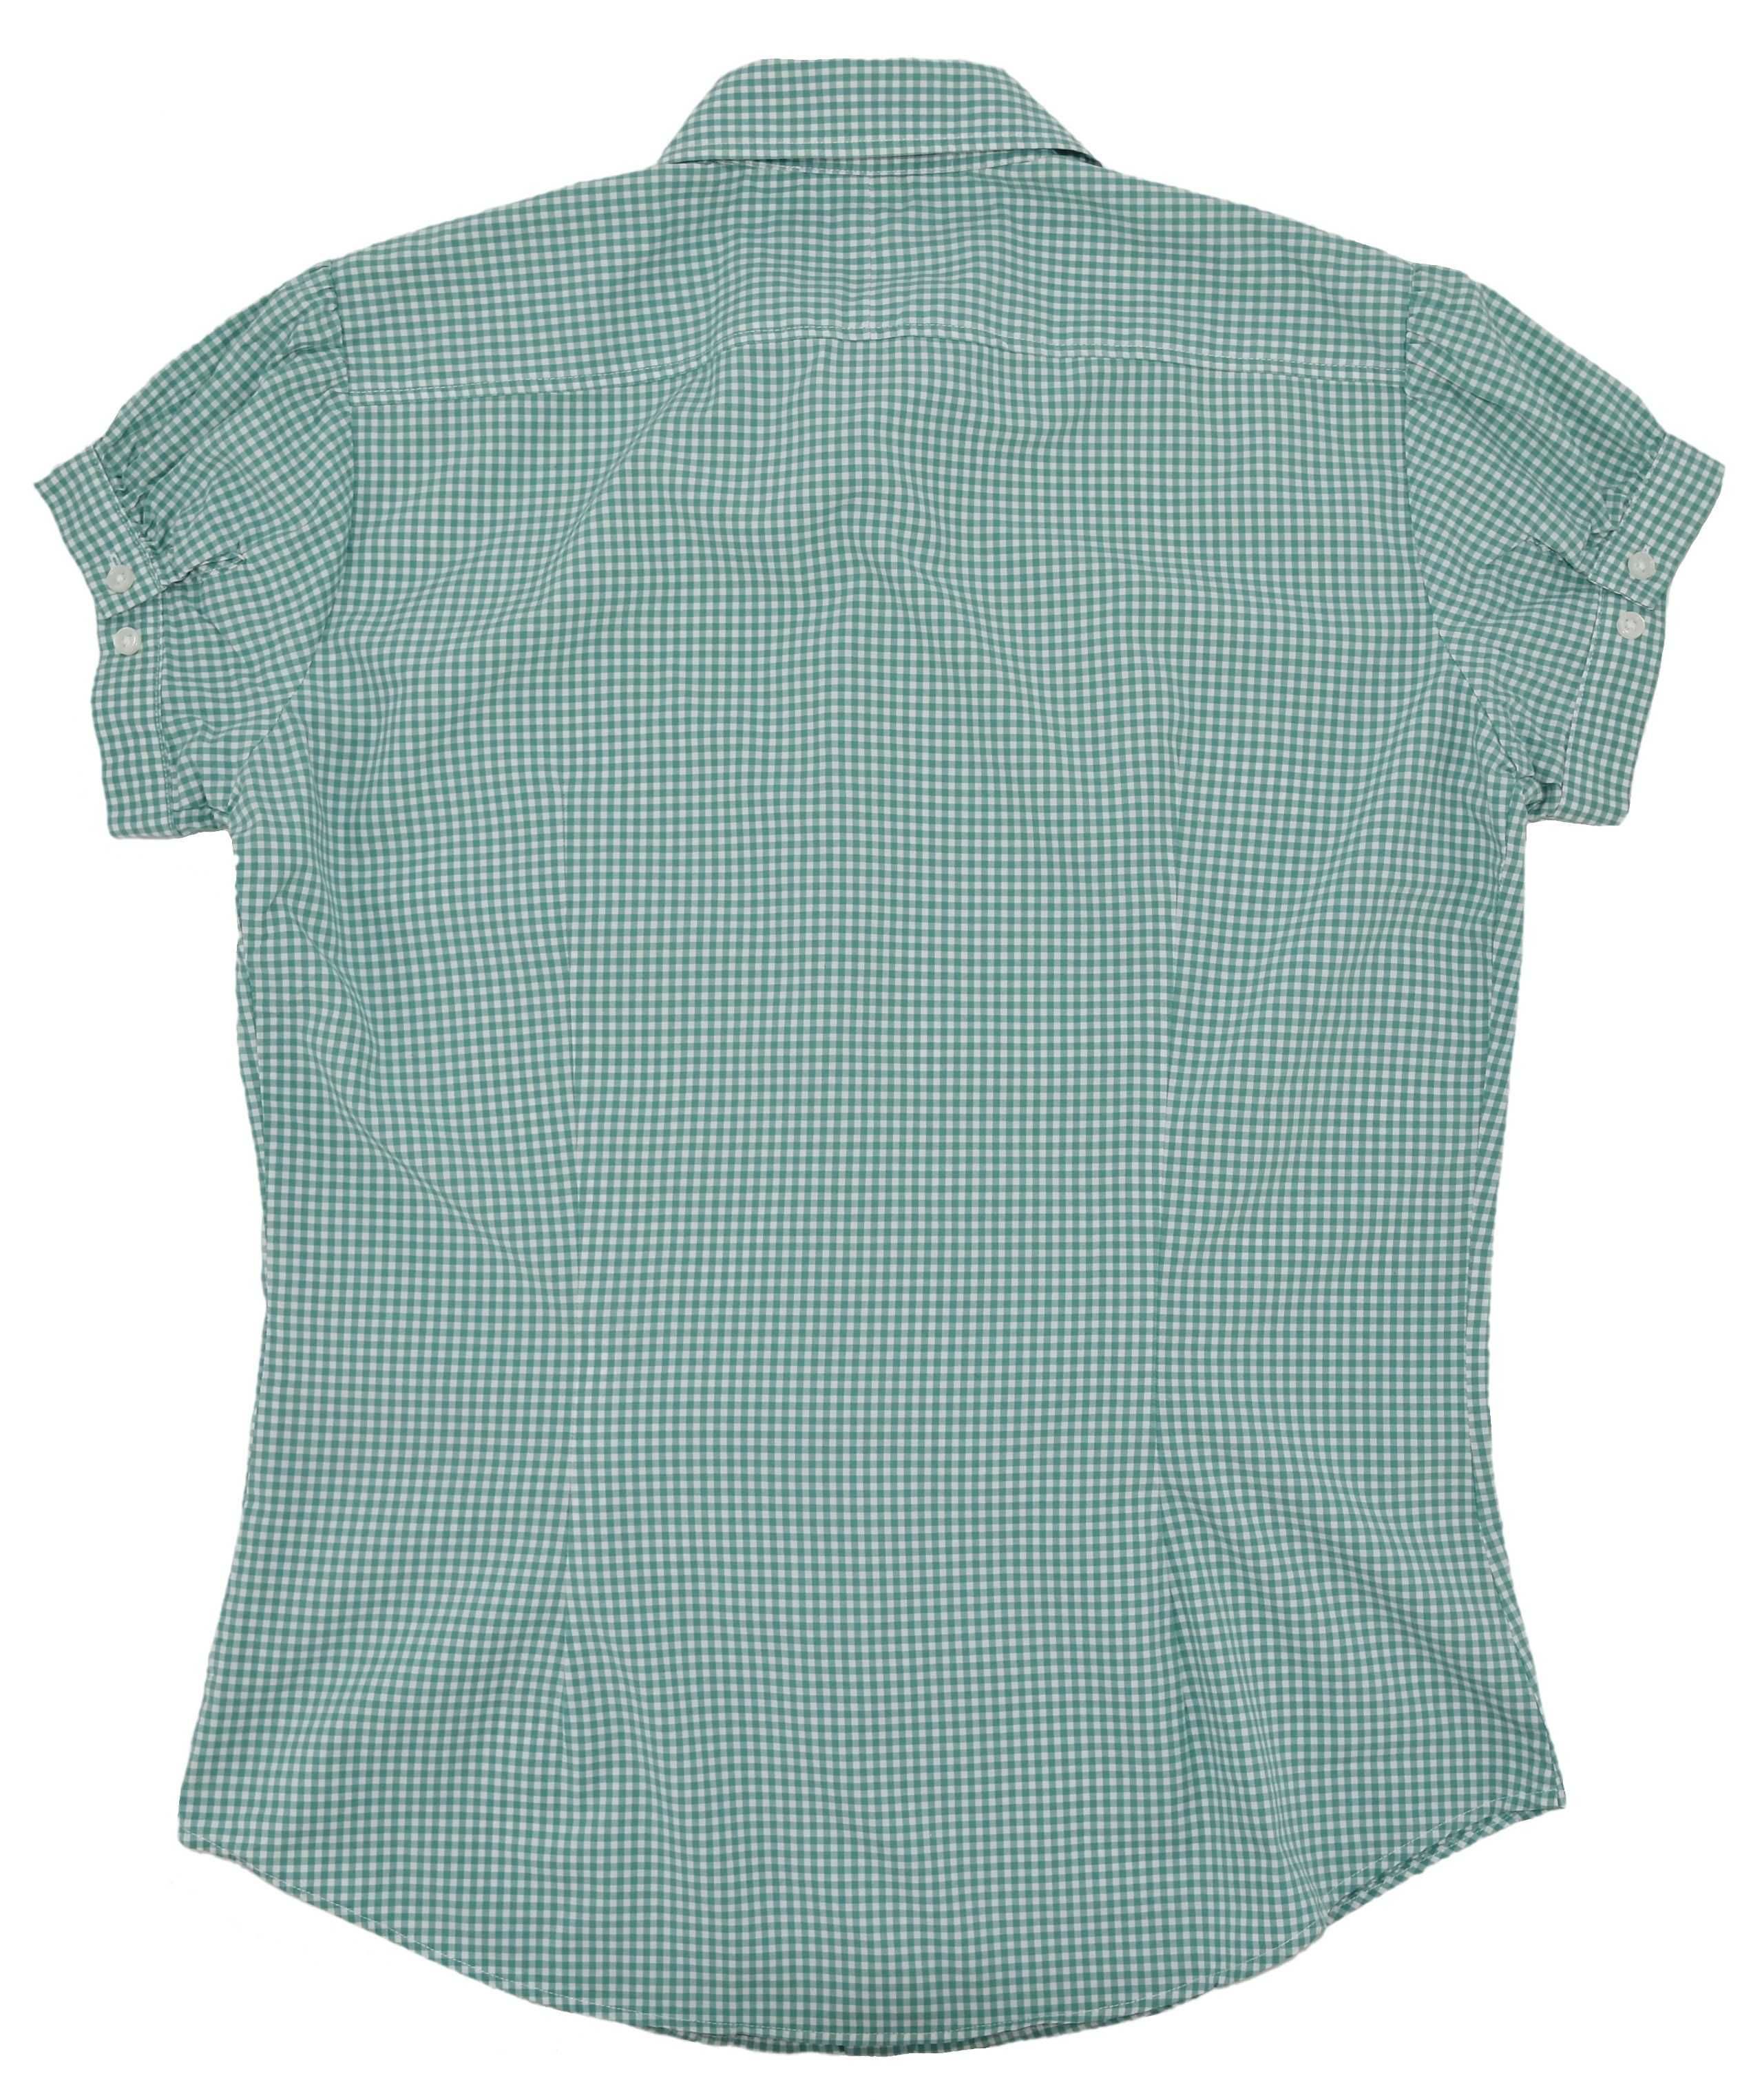 RALPH LAUREN bluzka damska koszula krótki rękaw 38